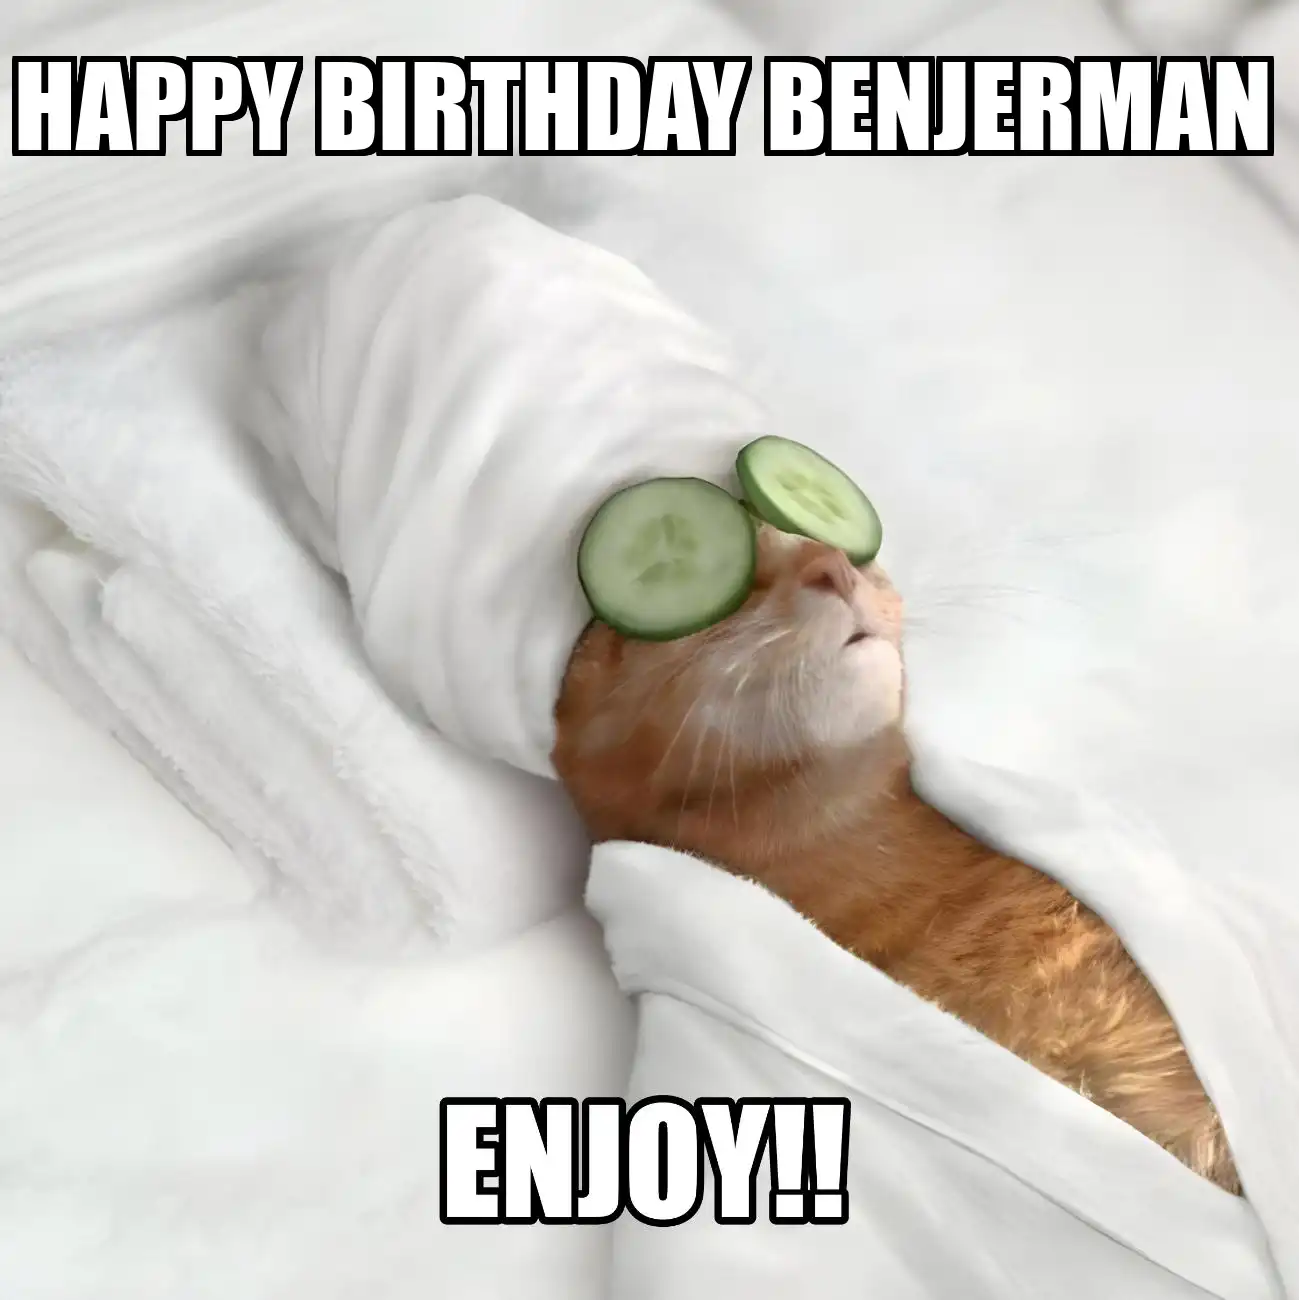 Happy Birthday Benjerman Enjoy Cat Meme